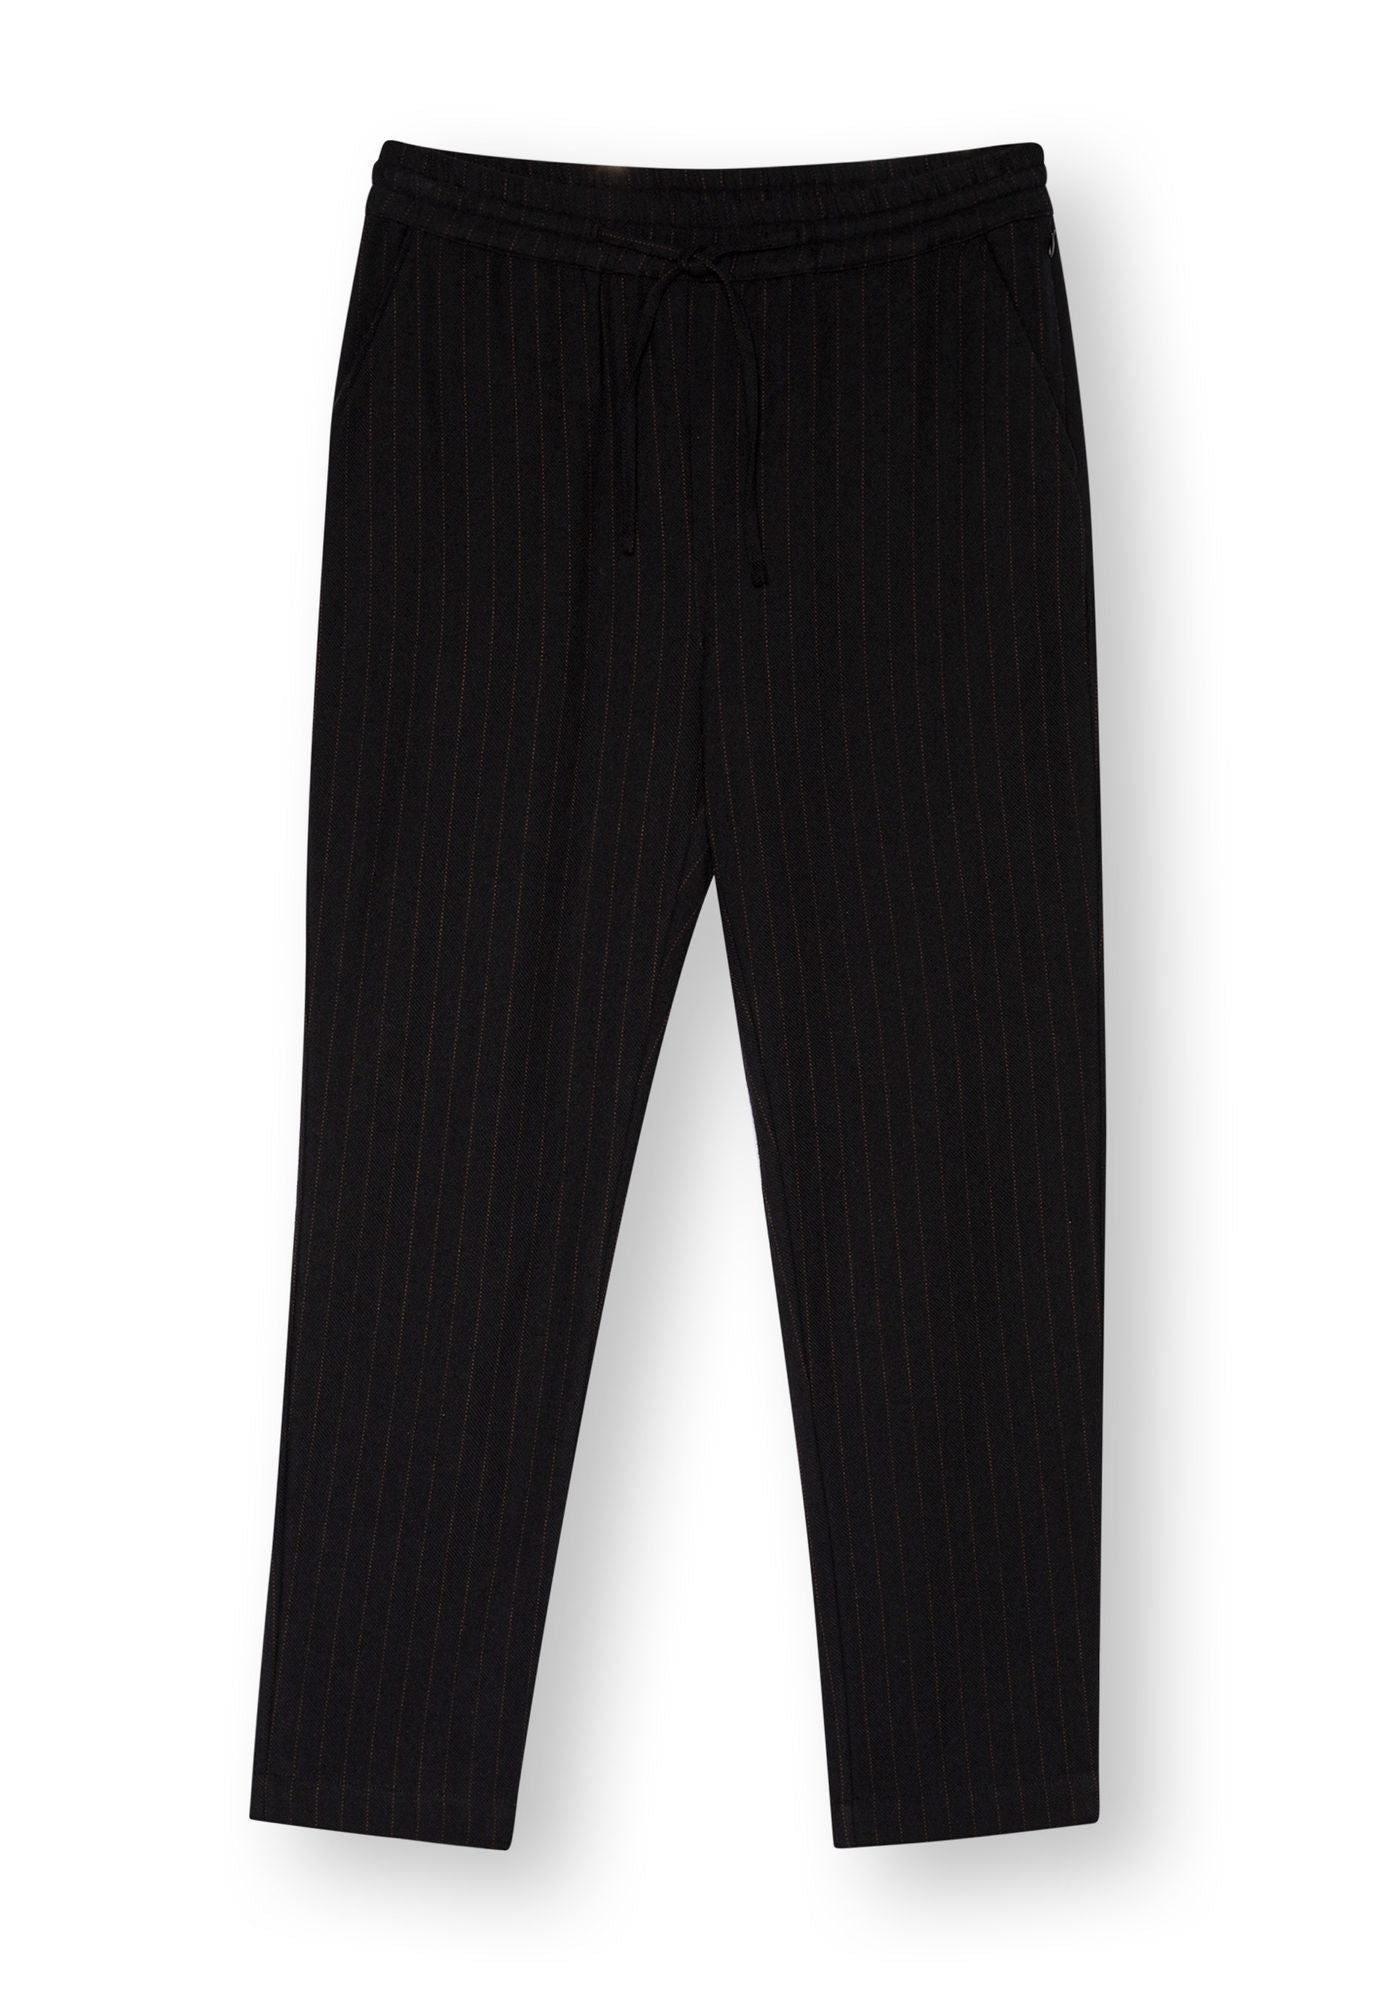 Black trousers TT82 made of organic cotton from Thokkthokk